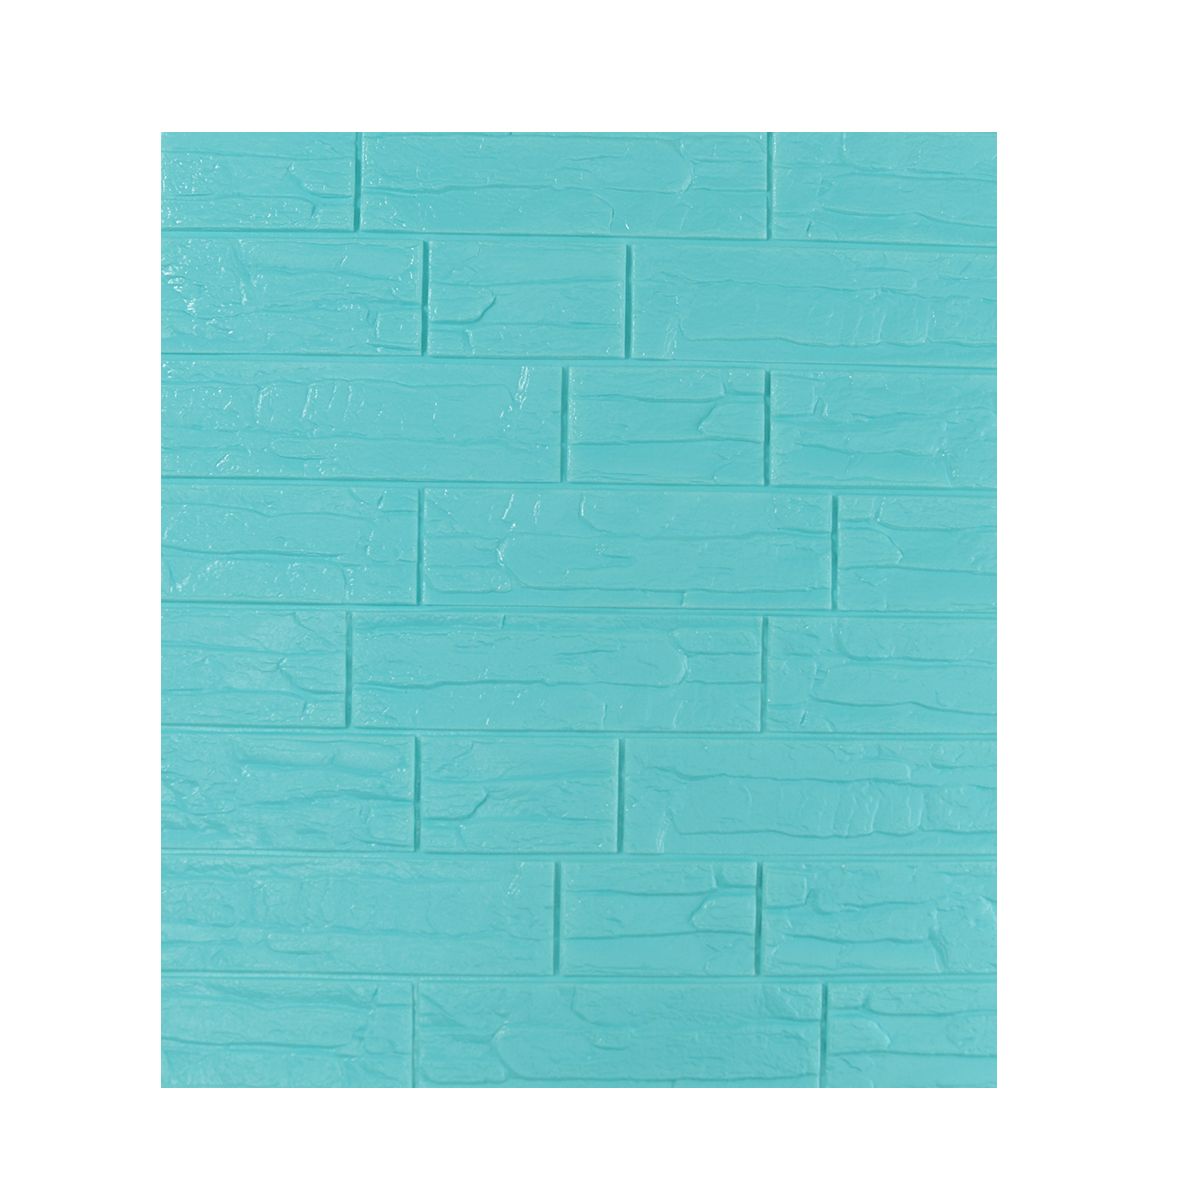 10Pcs-Set-3D-Brick-Wall-Stickers-Panels-Self-Adhesive-Decals-Bedroom-Home-Decoration-1715678